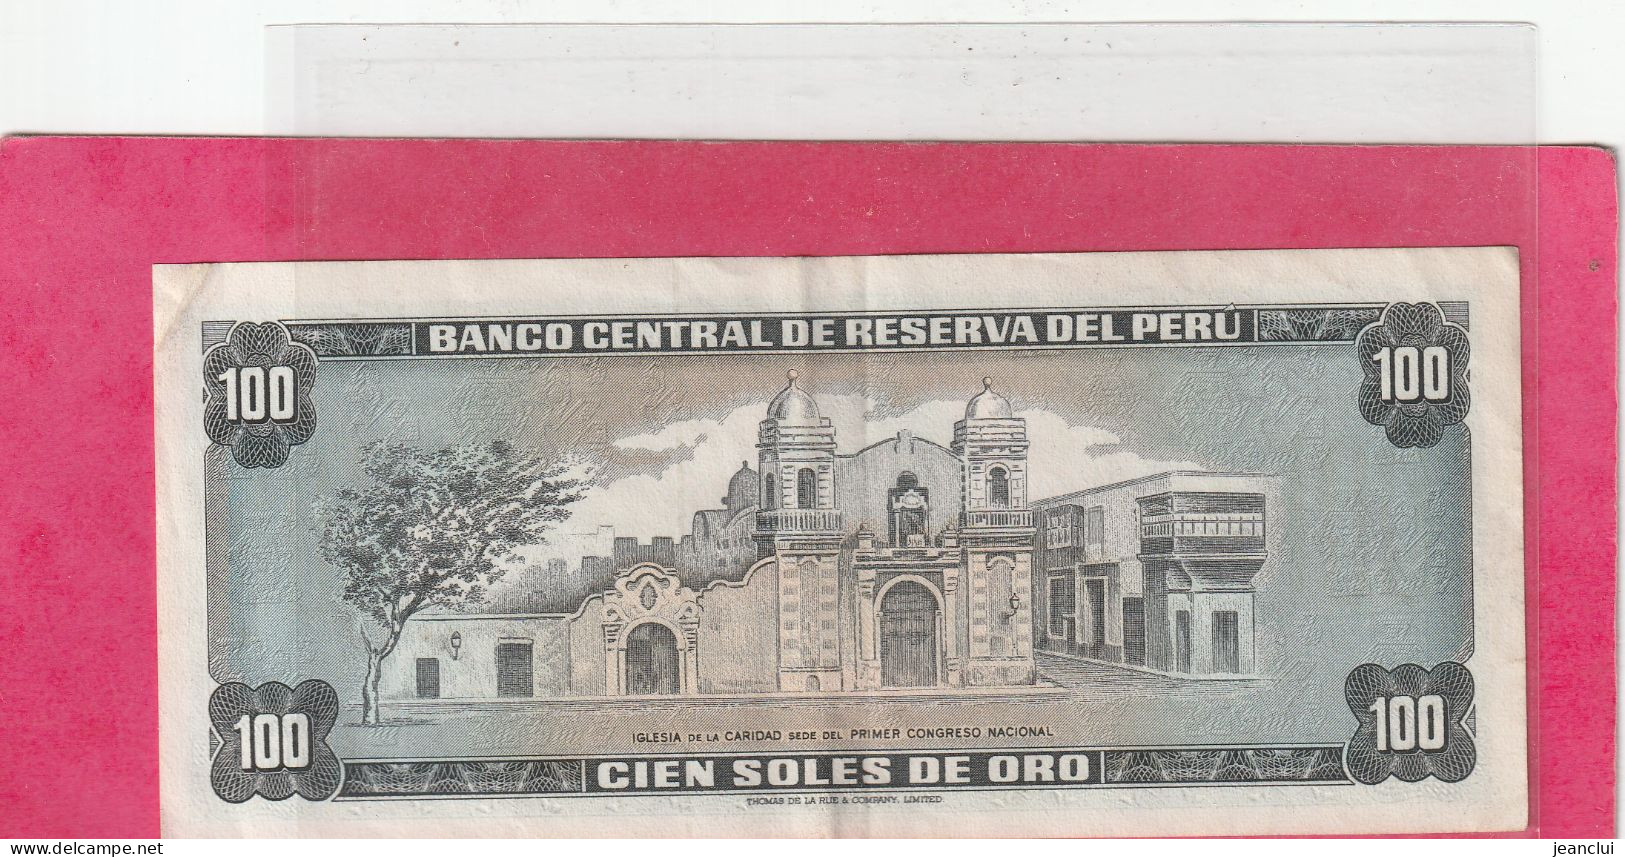 BANCO CENTRAL DE RESERVA DEL PERU .  100 SOLES DE ORO  .  16 DE MAYO DE 1974  . N°  G 121495 .  2 SCANNES  .  BEL ETAT - Peru